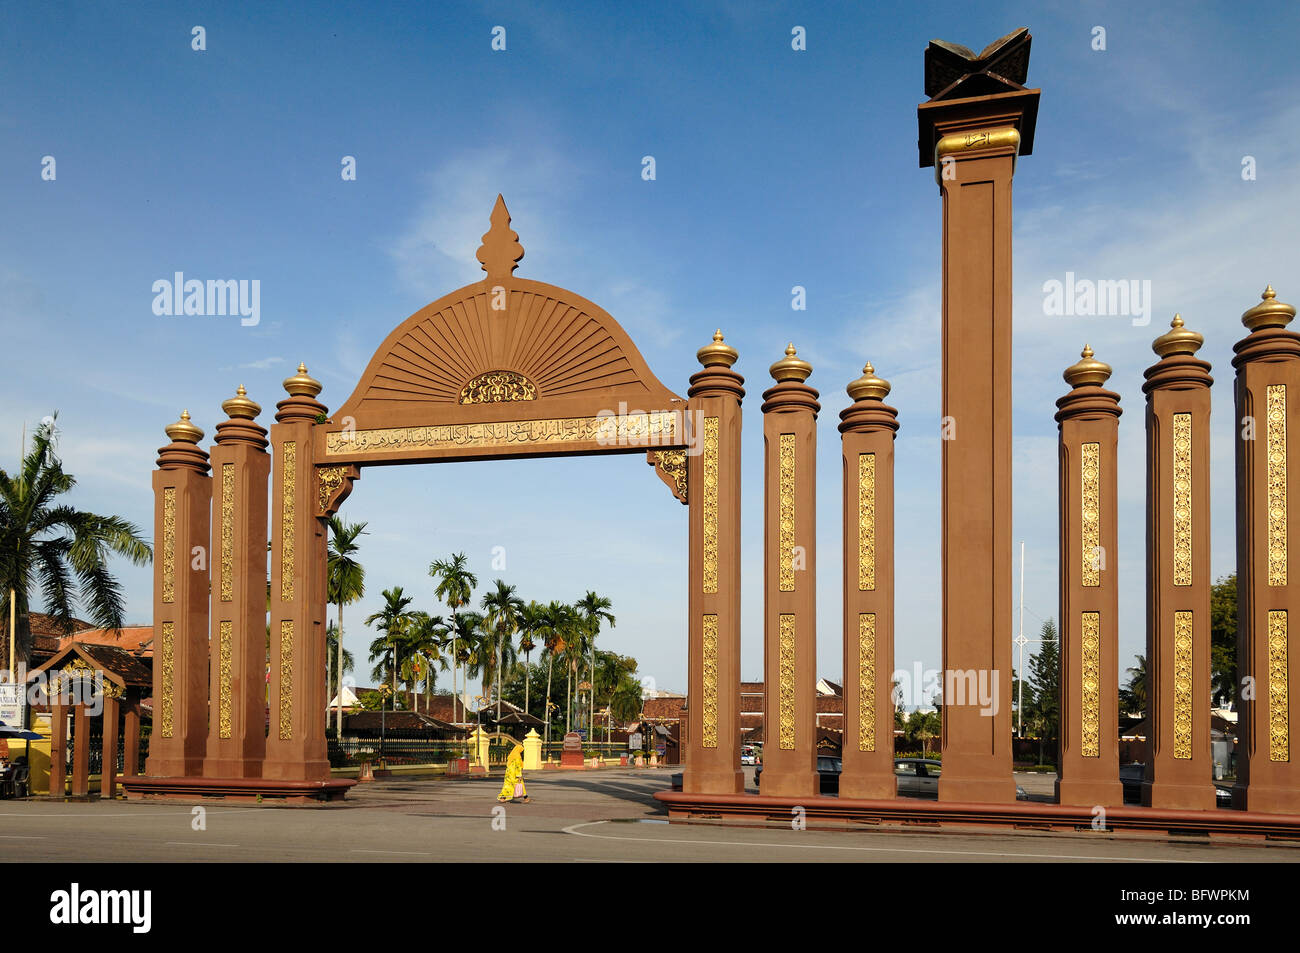 Sultan Ismail Petra Arch Or Modern City Commemorative Gate Kota Bahru Malaysia Stock Photo Alamy